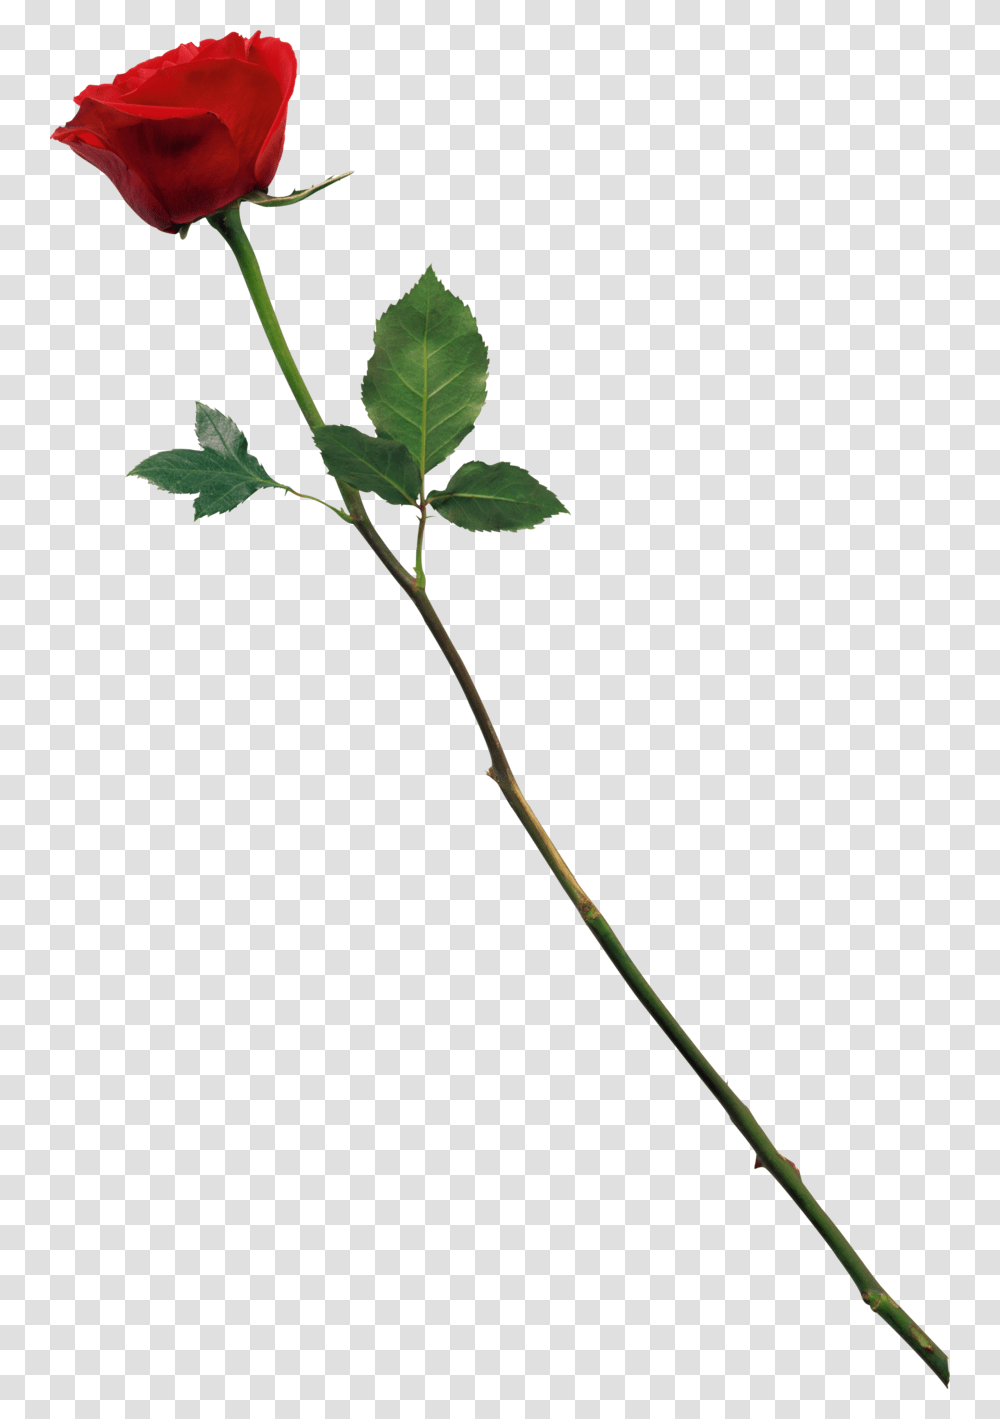 Red Rose By Marioara08 D57fjic Love Cb Background Hd, Leaf, Plant, Flower, Blossom Transparent Png